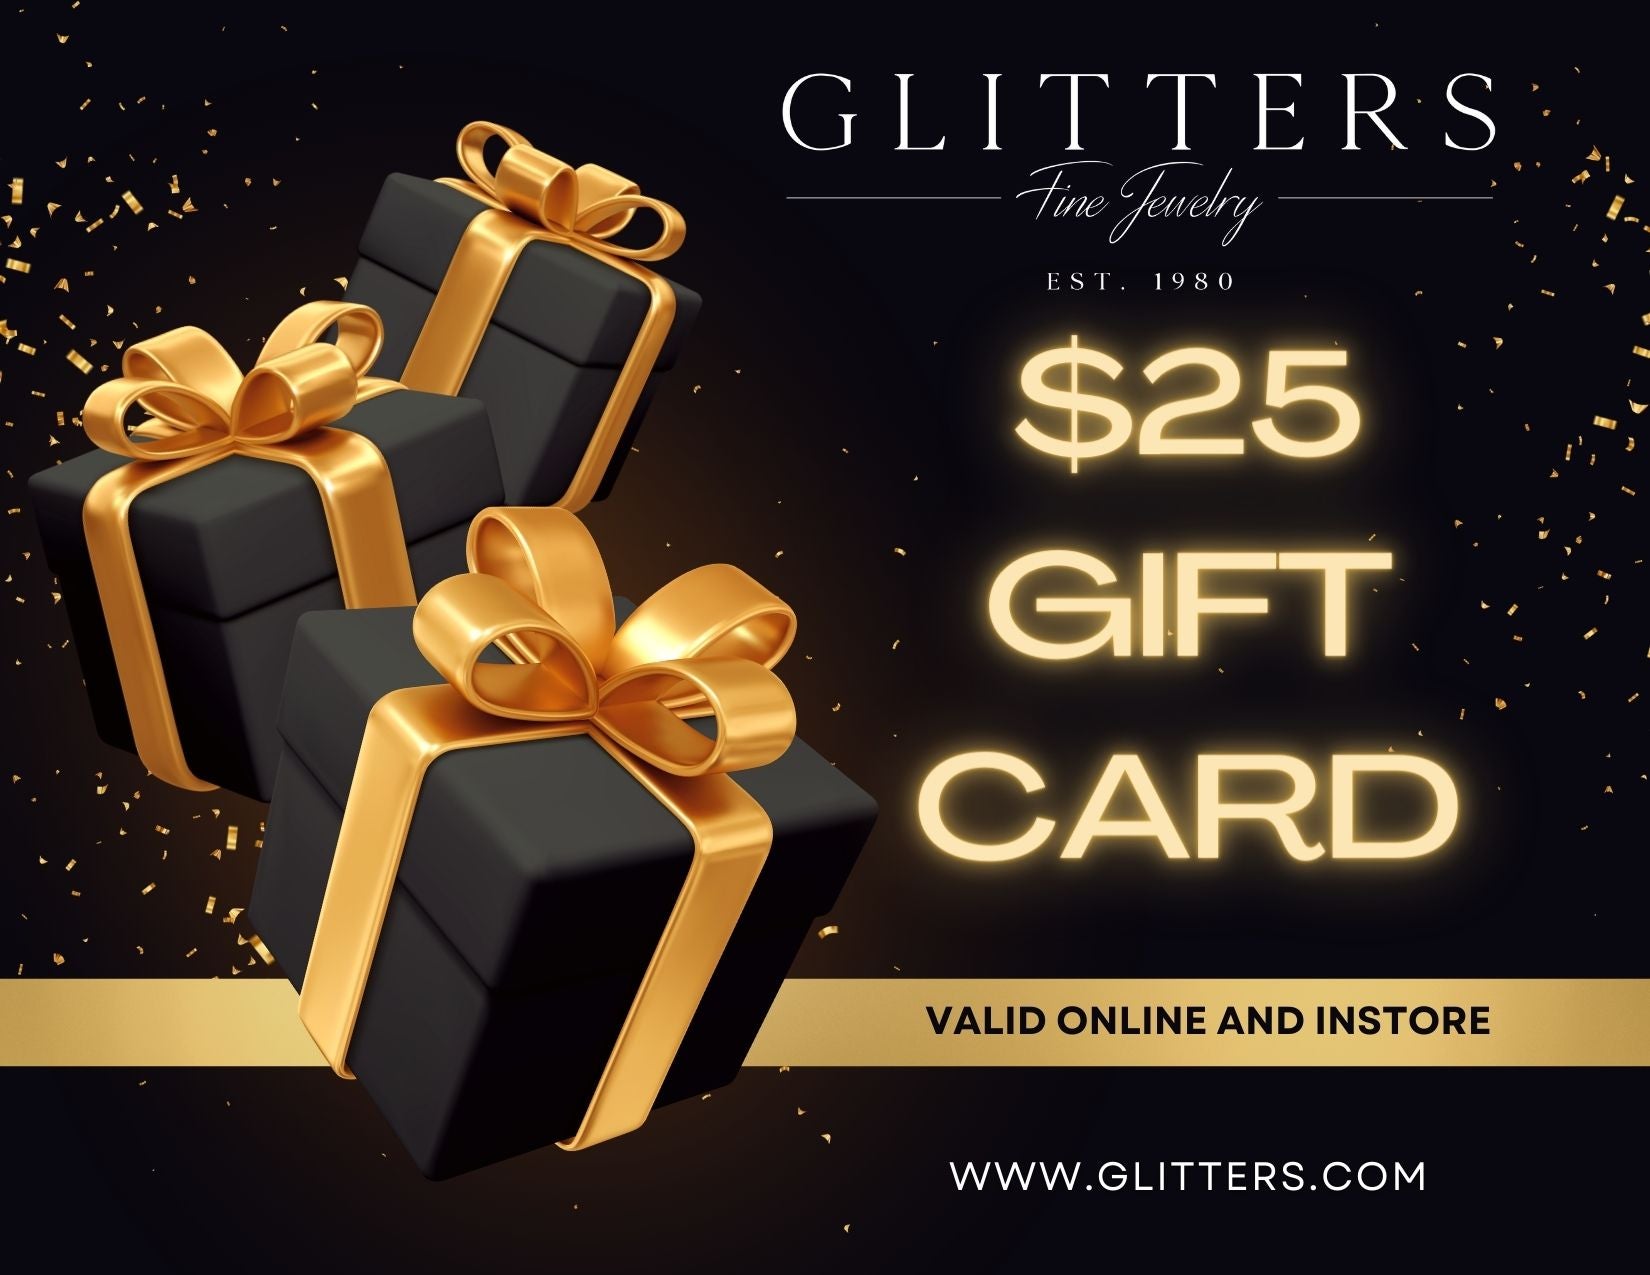 Glitters Fine Jewelry Gift Card $25